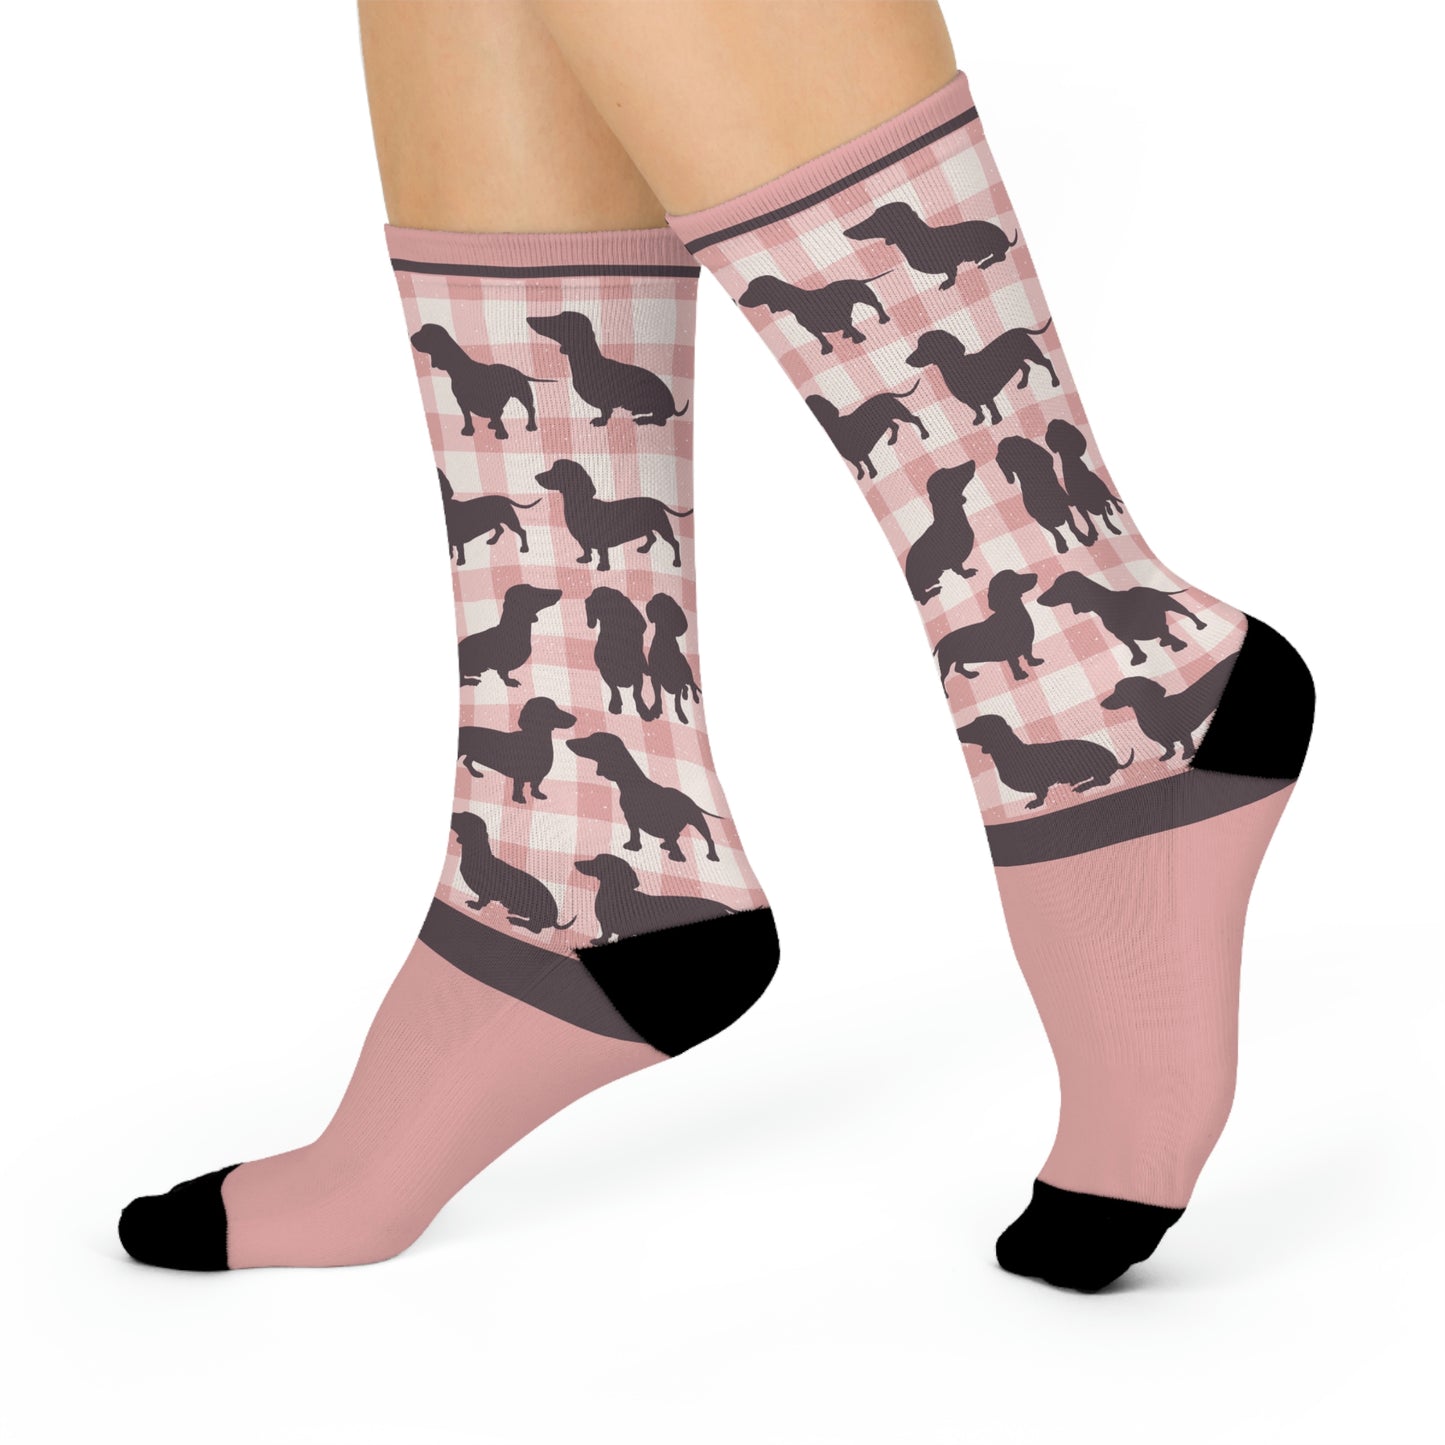 Dachshund Socks Gingham Unisex Adult Stretchy Mid Calf Original